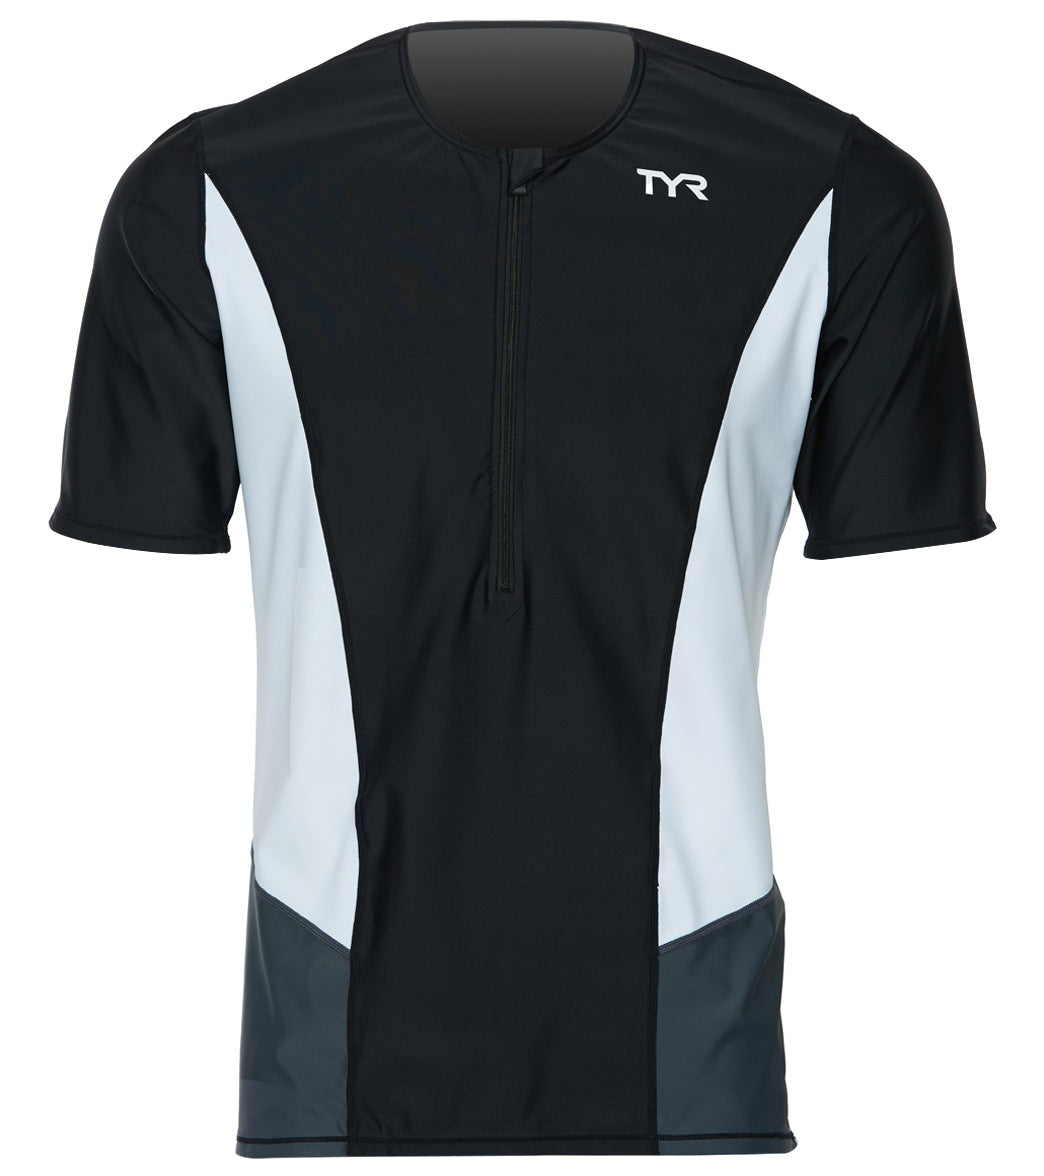 TYR Men's Competitor Short Sleeve Top - Blk/Wht Medium - Swimoutlet.com